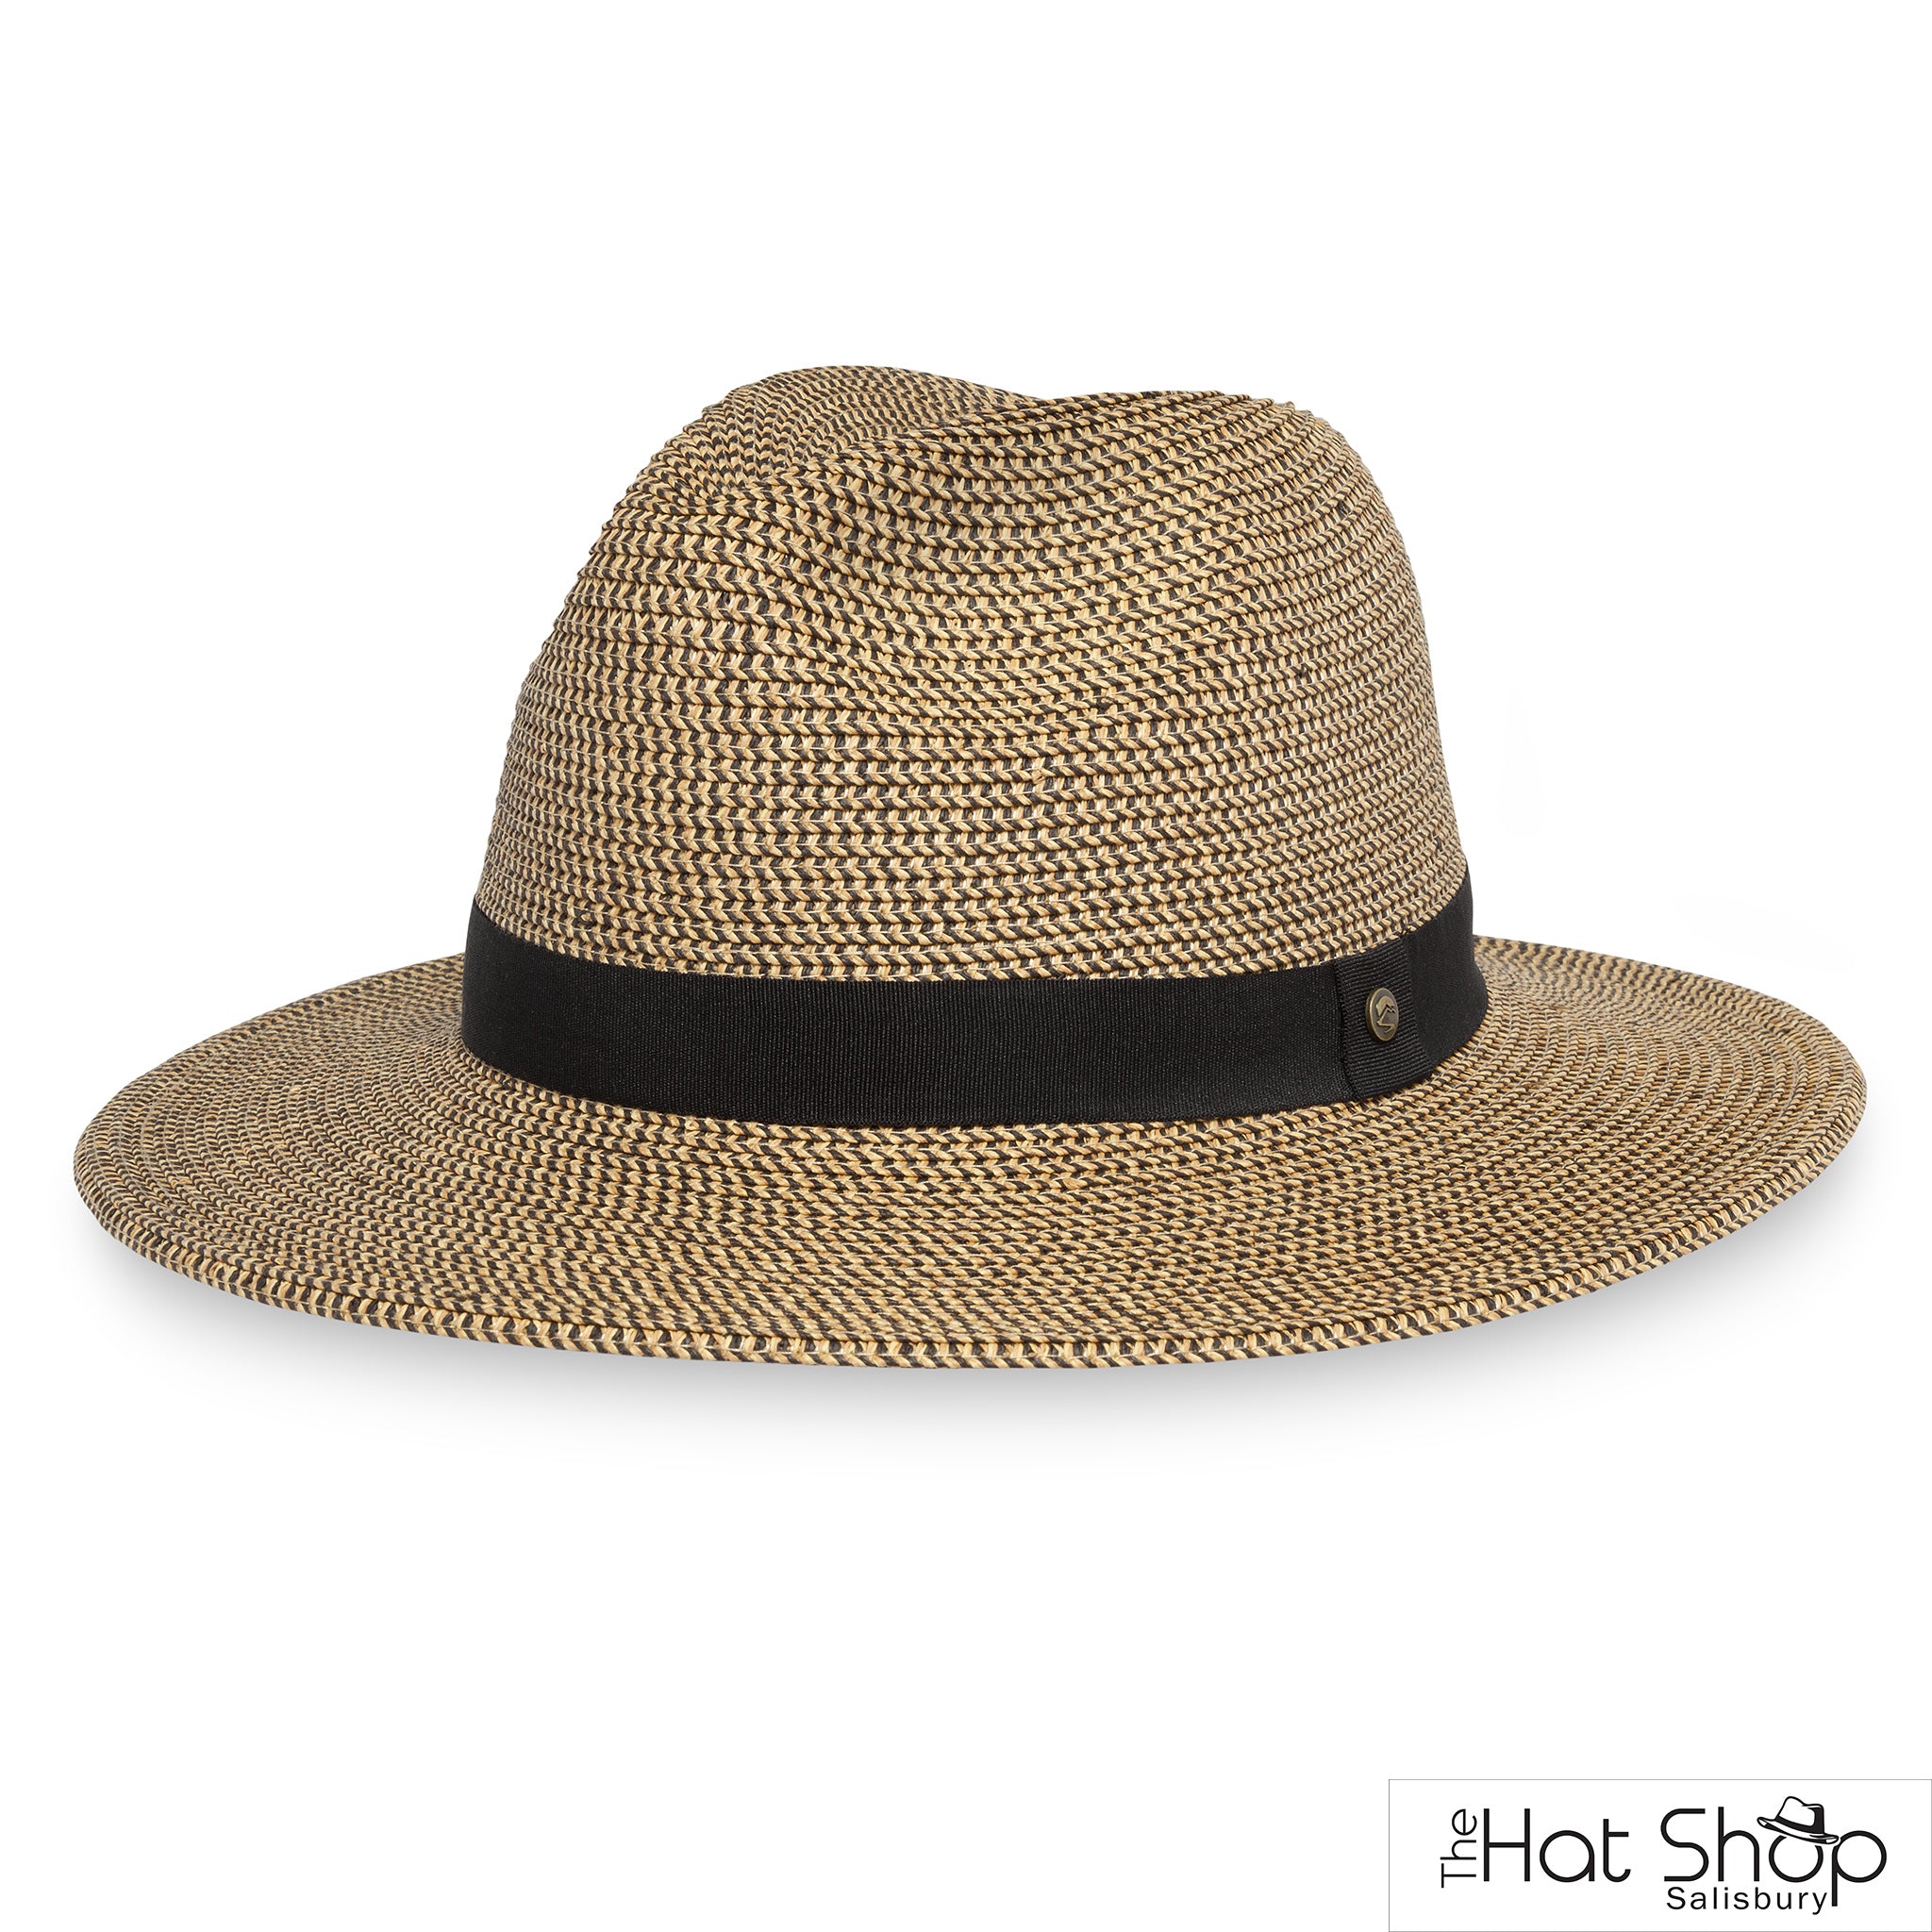 The Hat Shop Salisbury Sunday Afternoons Havana Fedora Style Sun Hat Tweed